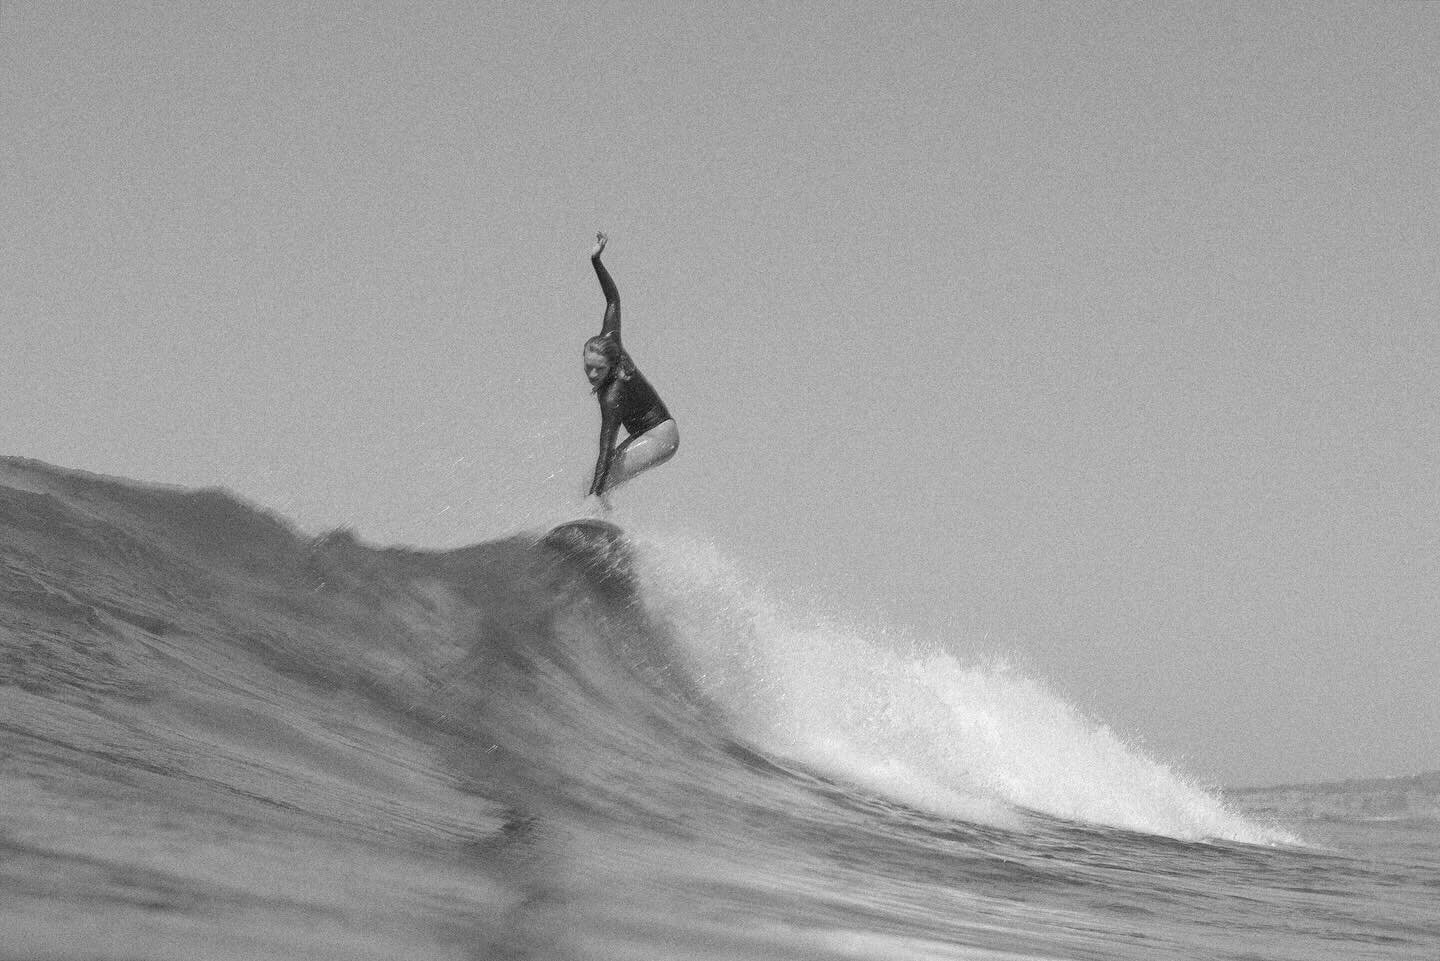 Catching waves with @paulajamiebos 📸🌊